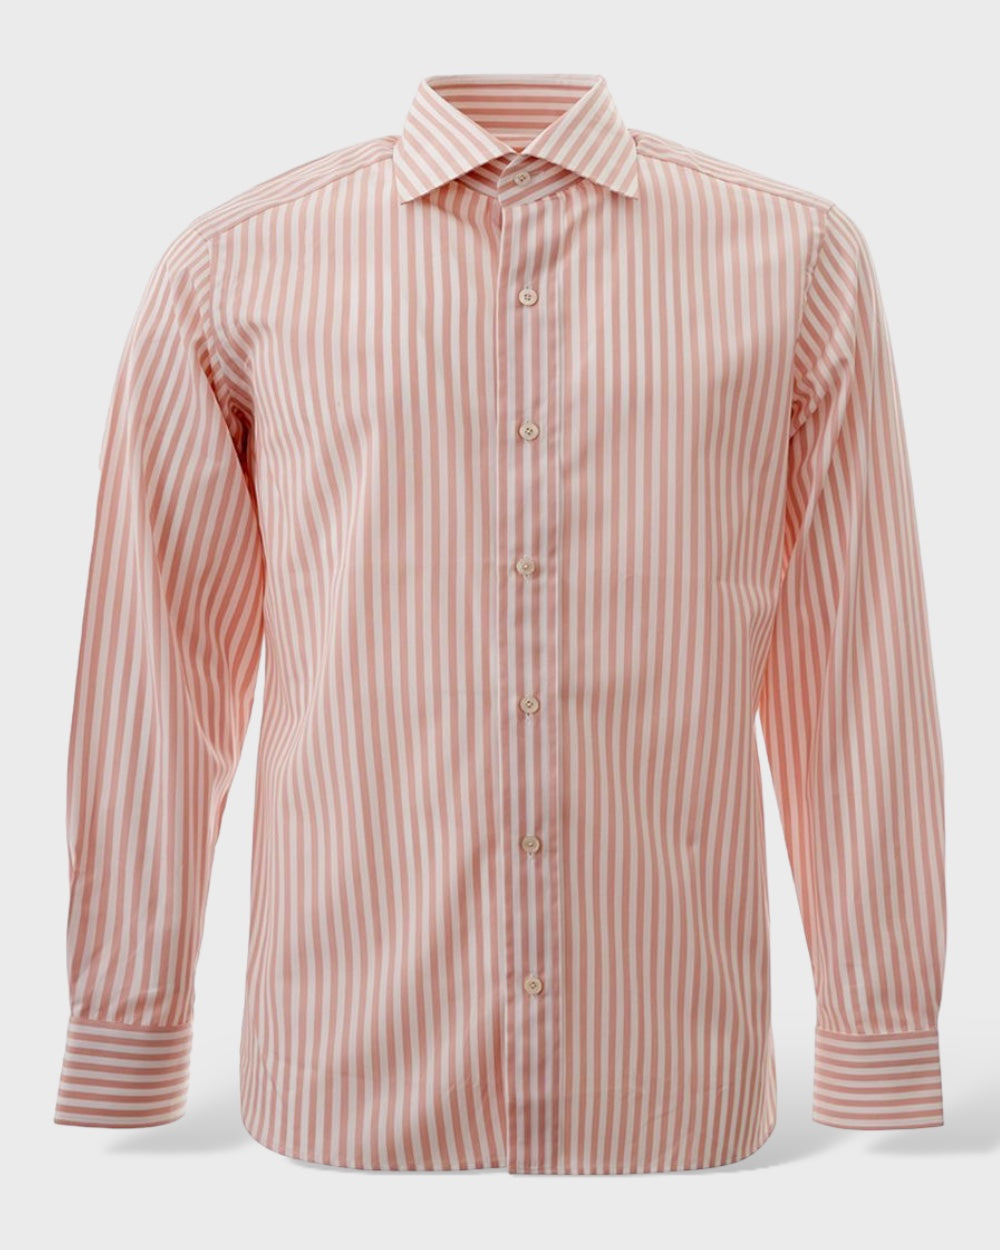 Tom Ford Pink Striped Regular Fit Shirt